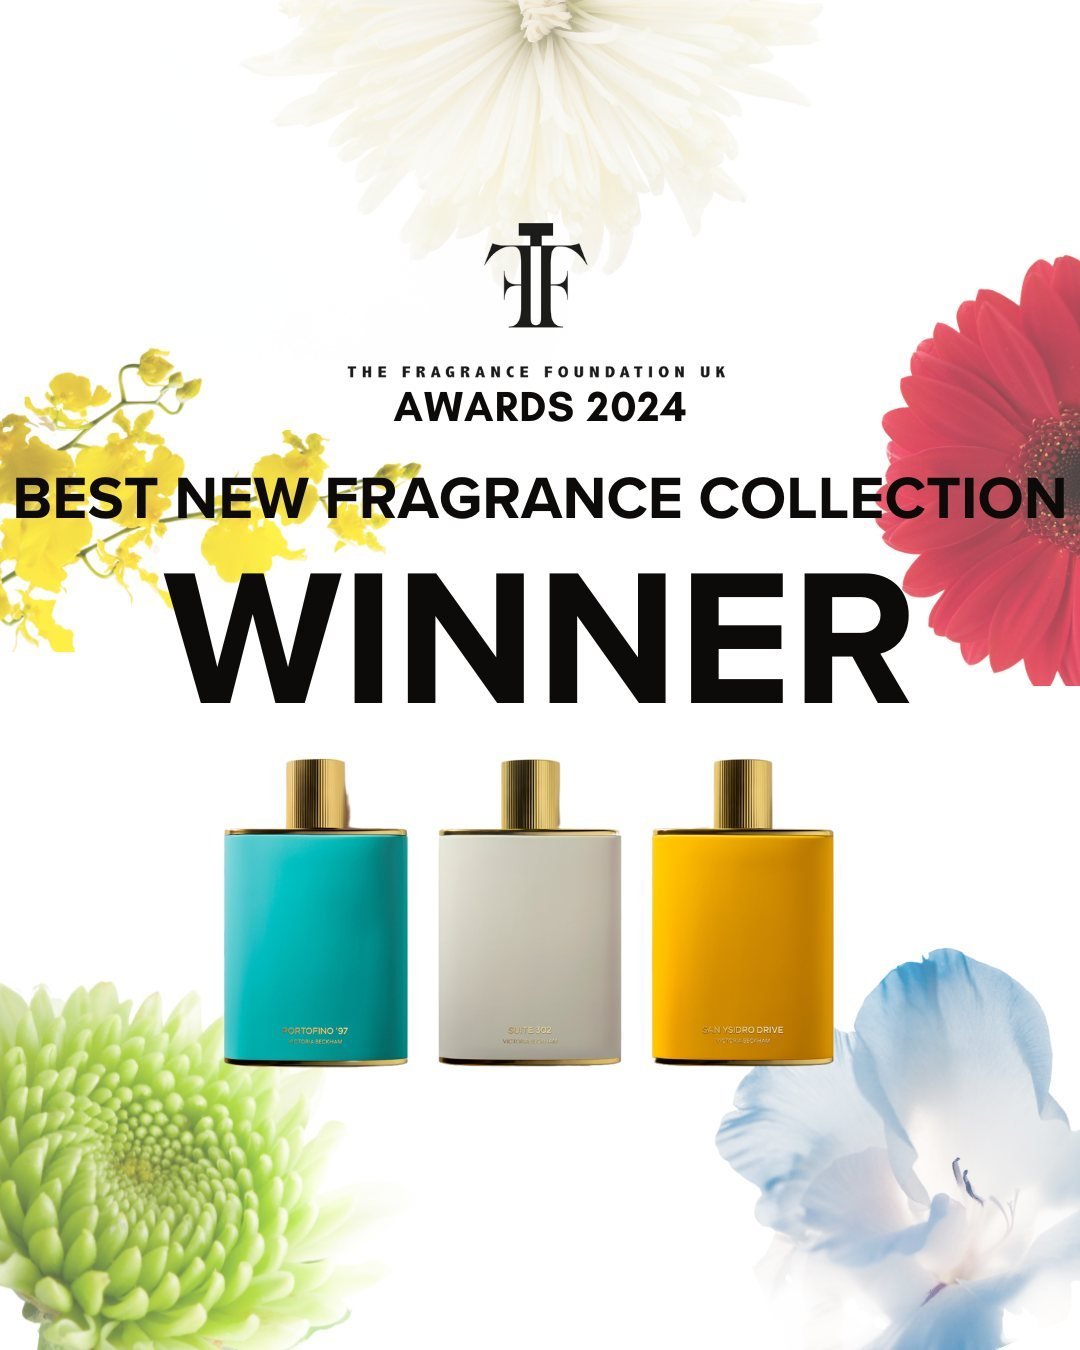 Winner of The Fragrance Foundation UK Best New Fragrance Collection Award... 
@VictoriaBeckhamBeauty Fragrance Collection! Congratulations!

#TFFAwards2024 #Winner #FragranceAwards #Fragrance #FragranceLover #FragranceCelebration